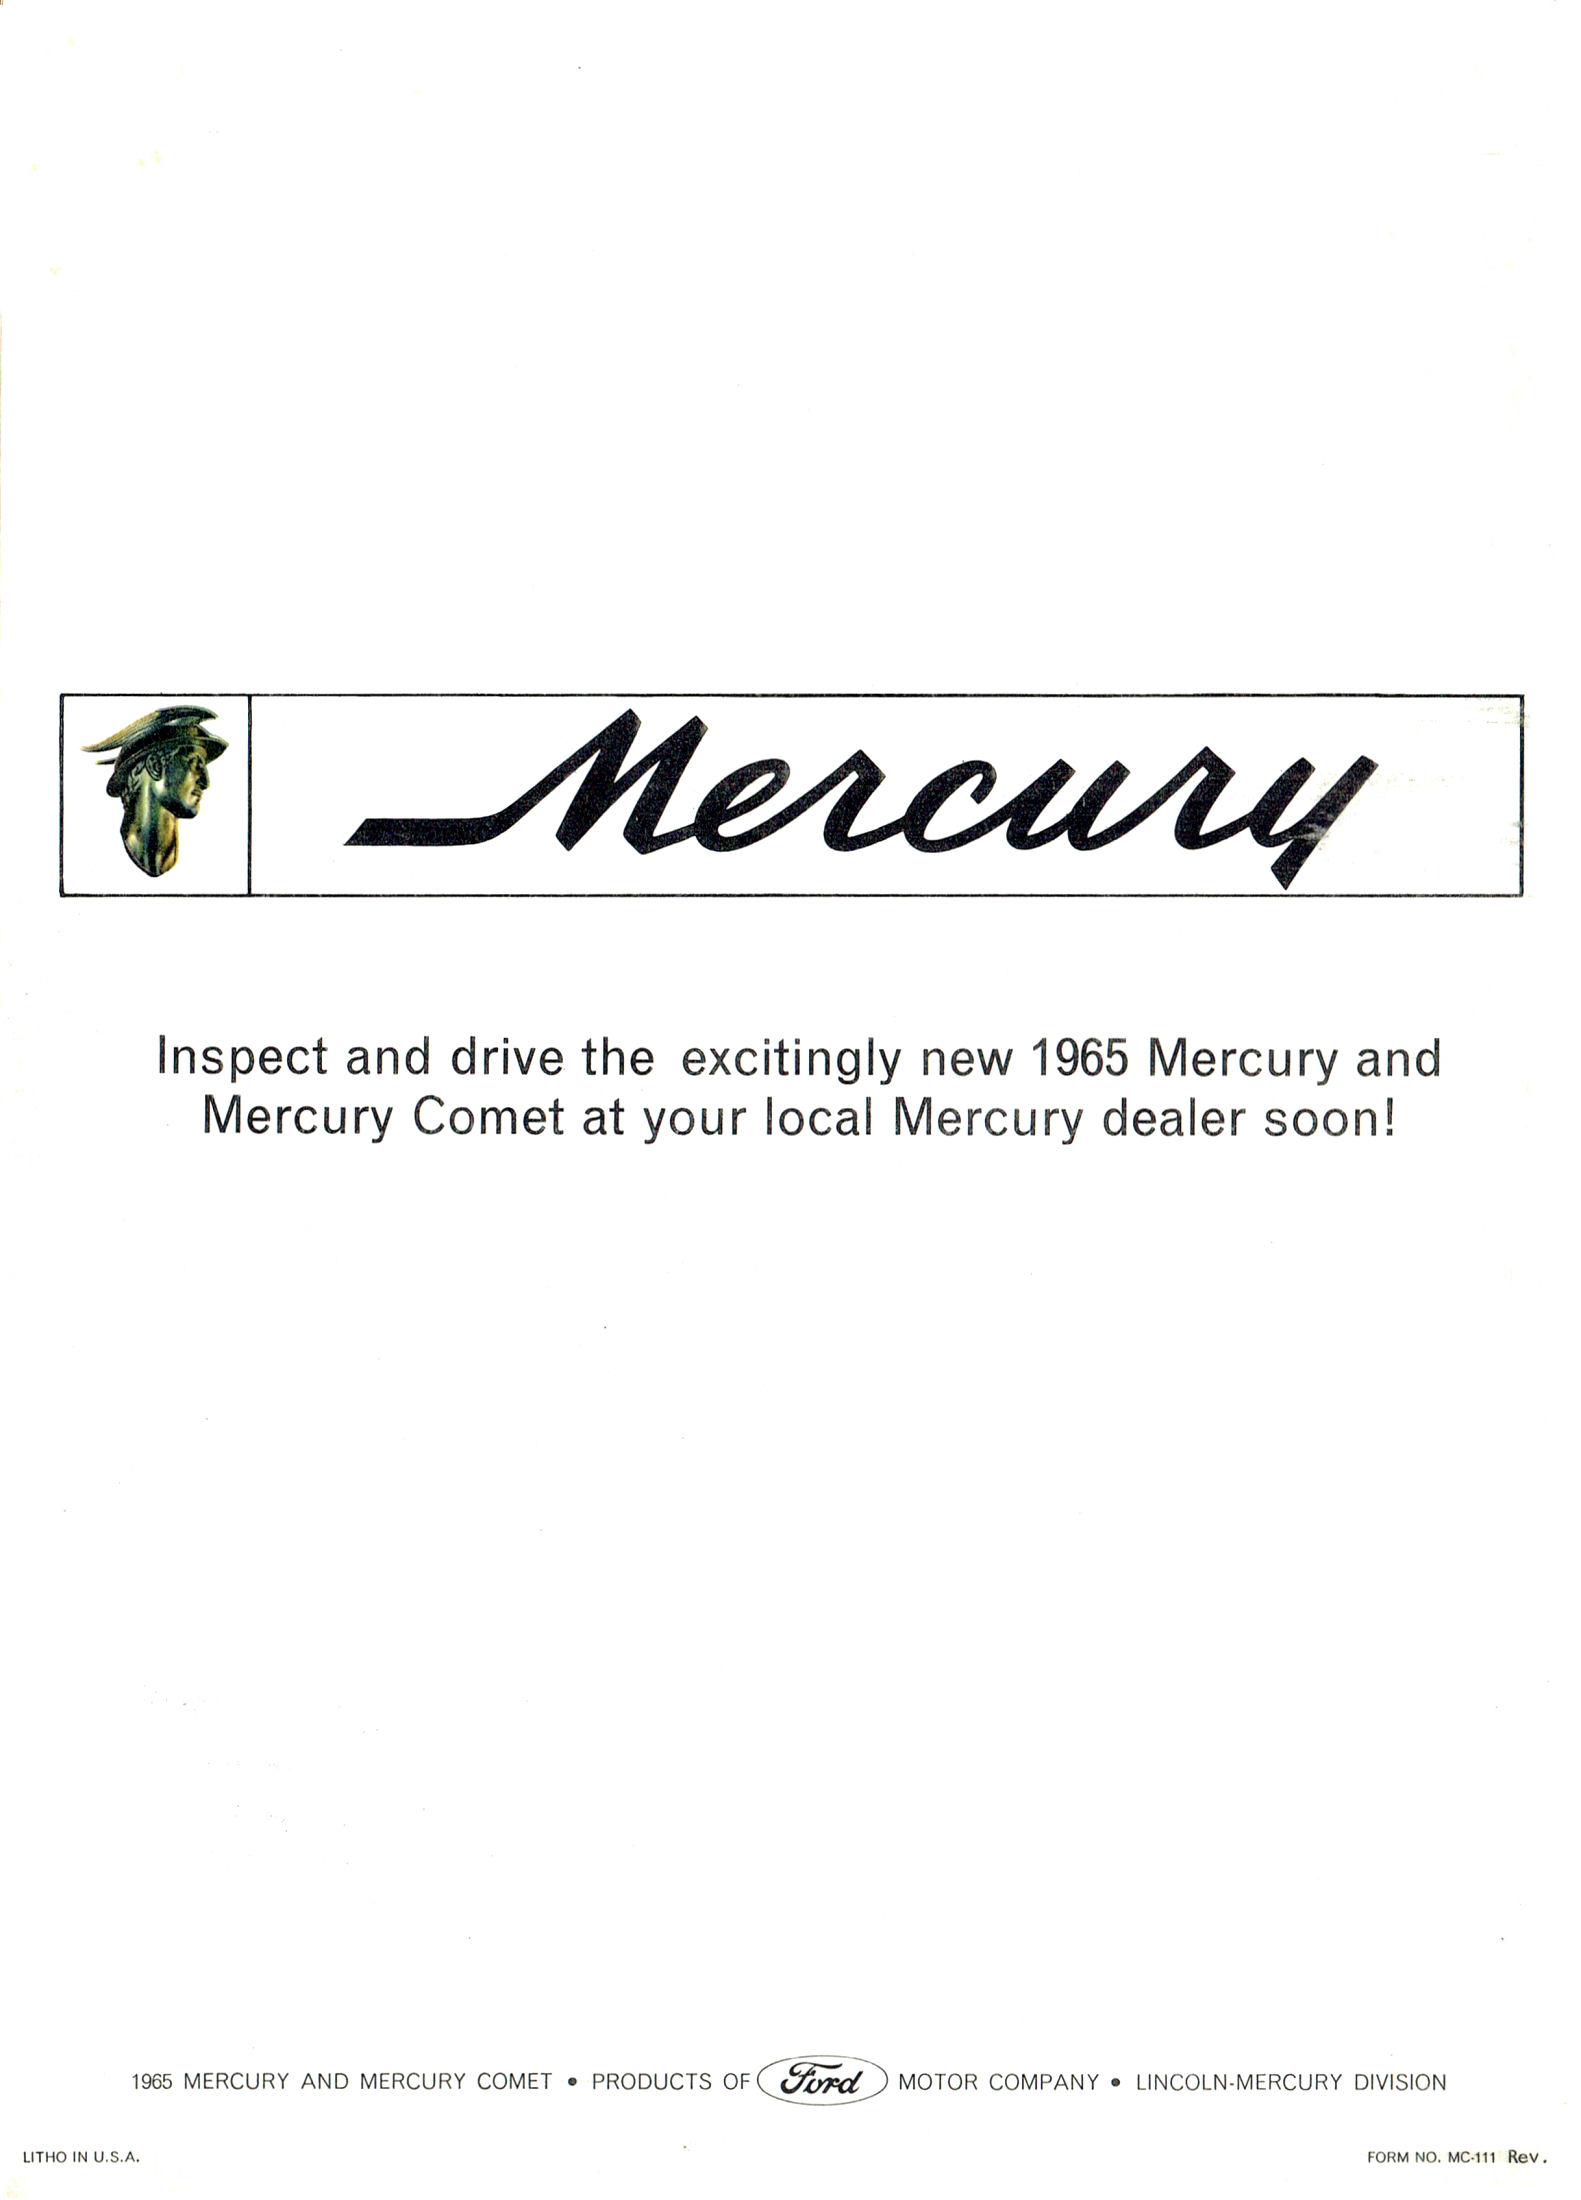 1965 Mercury Full Line (Rev)-32